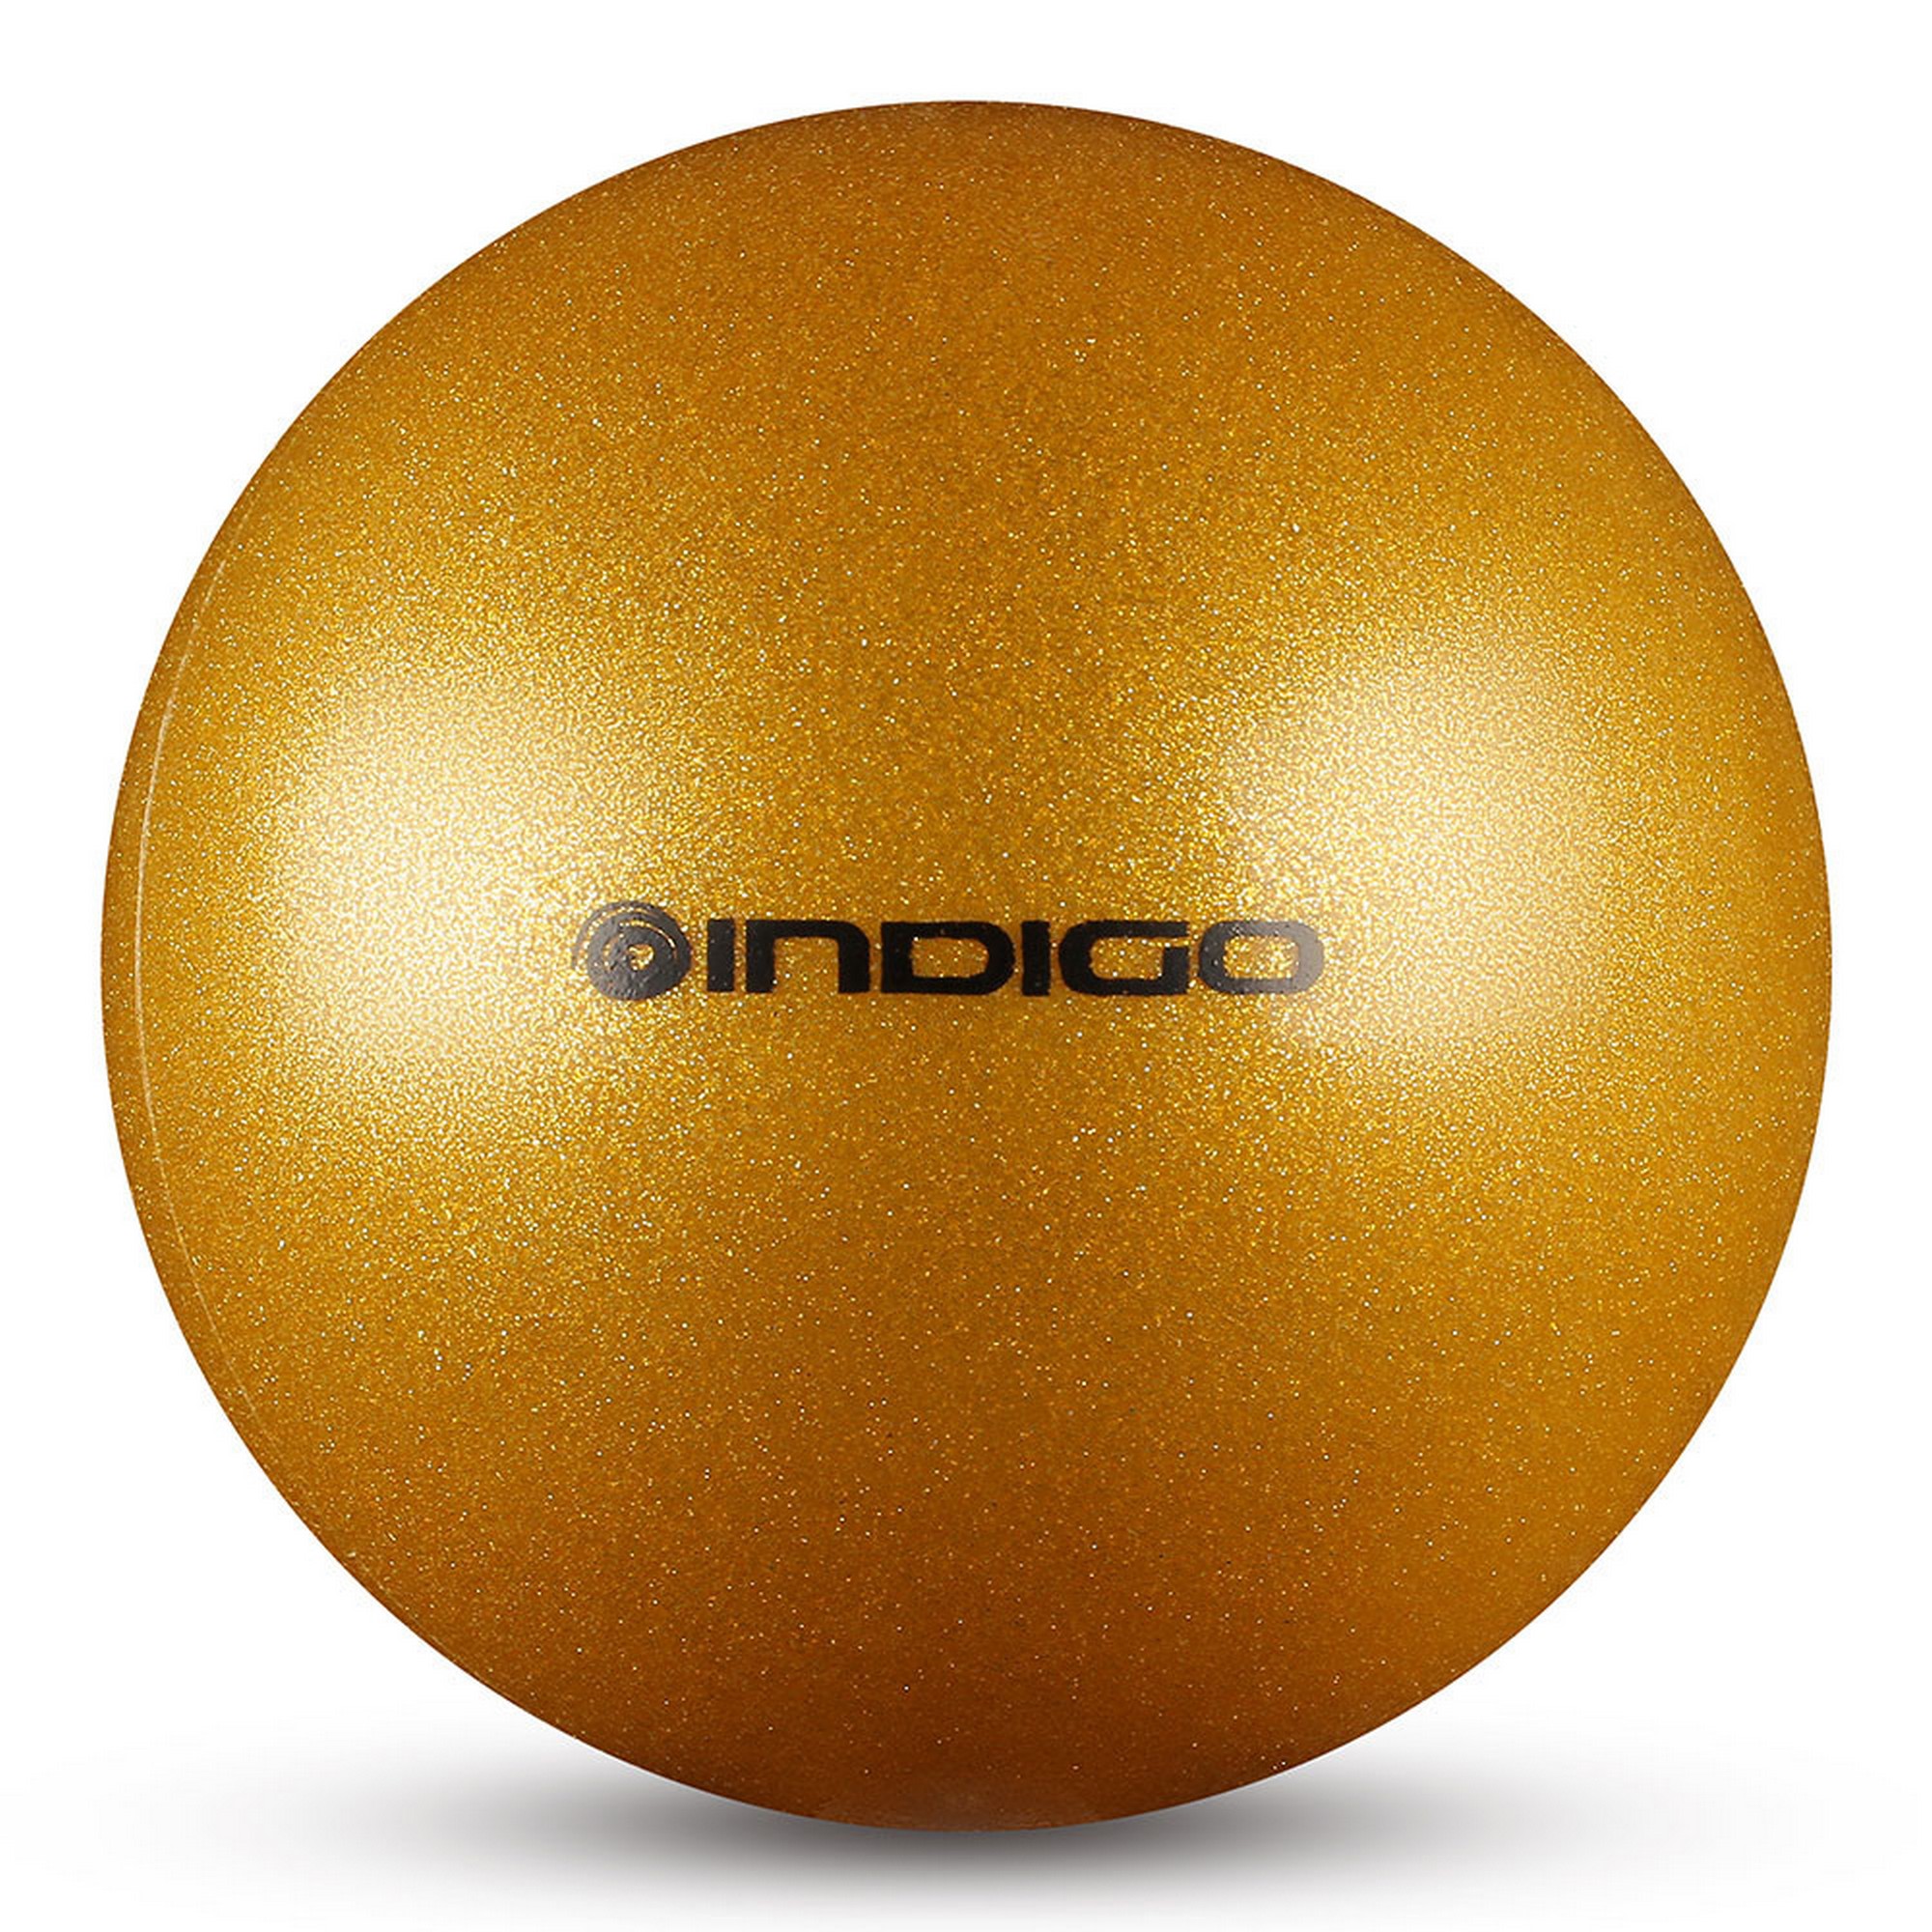     d15 Indigo  IN119-GOLD   